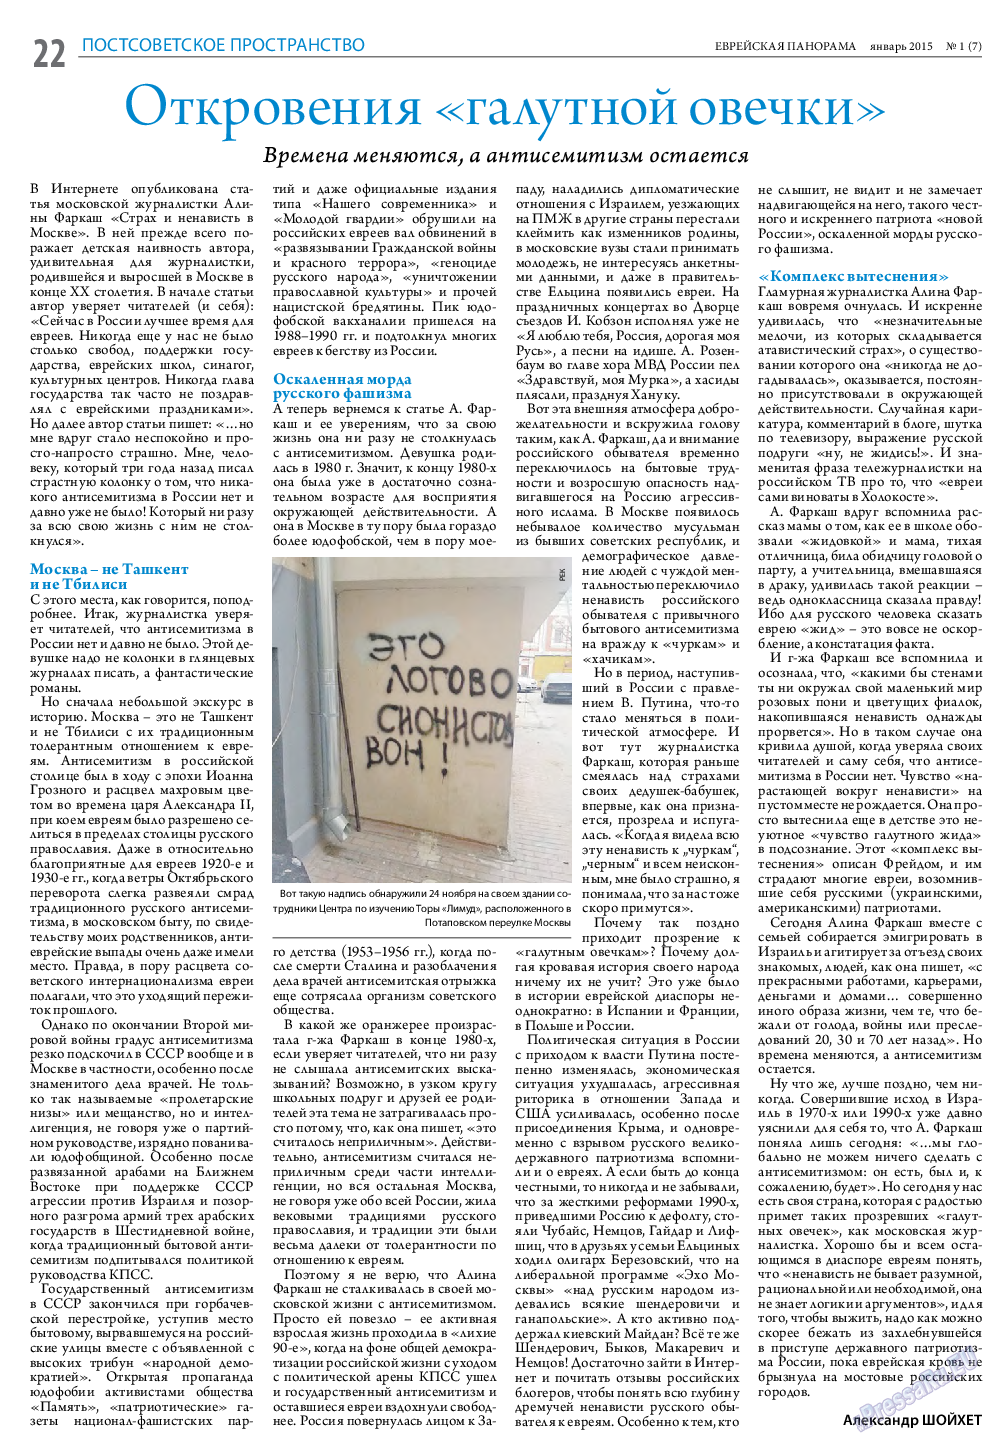 Еврейская панорама, газета. 2015 №1 стр.22